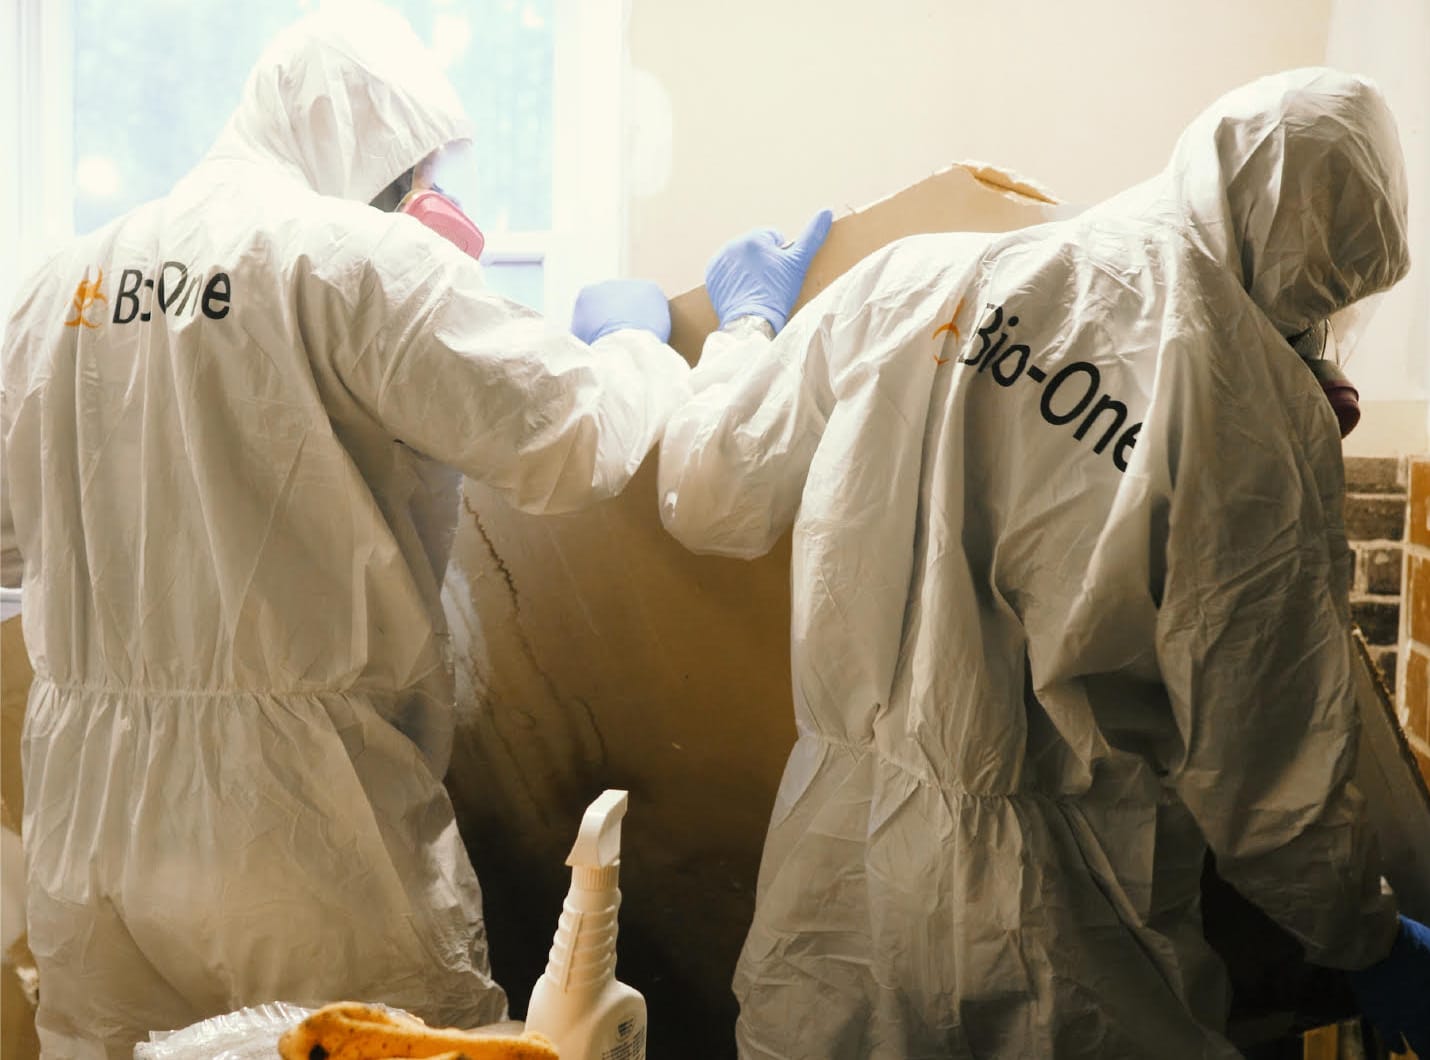 Death, Crime Scene, Biohazard & Hoarding Clean Up Services for La Porte